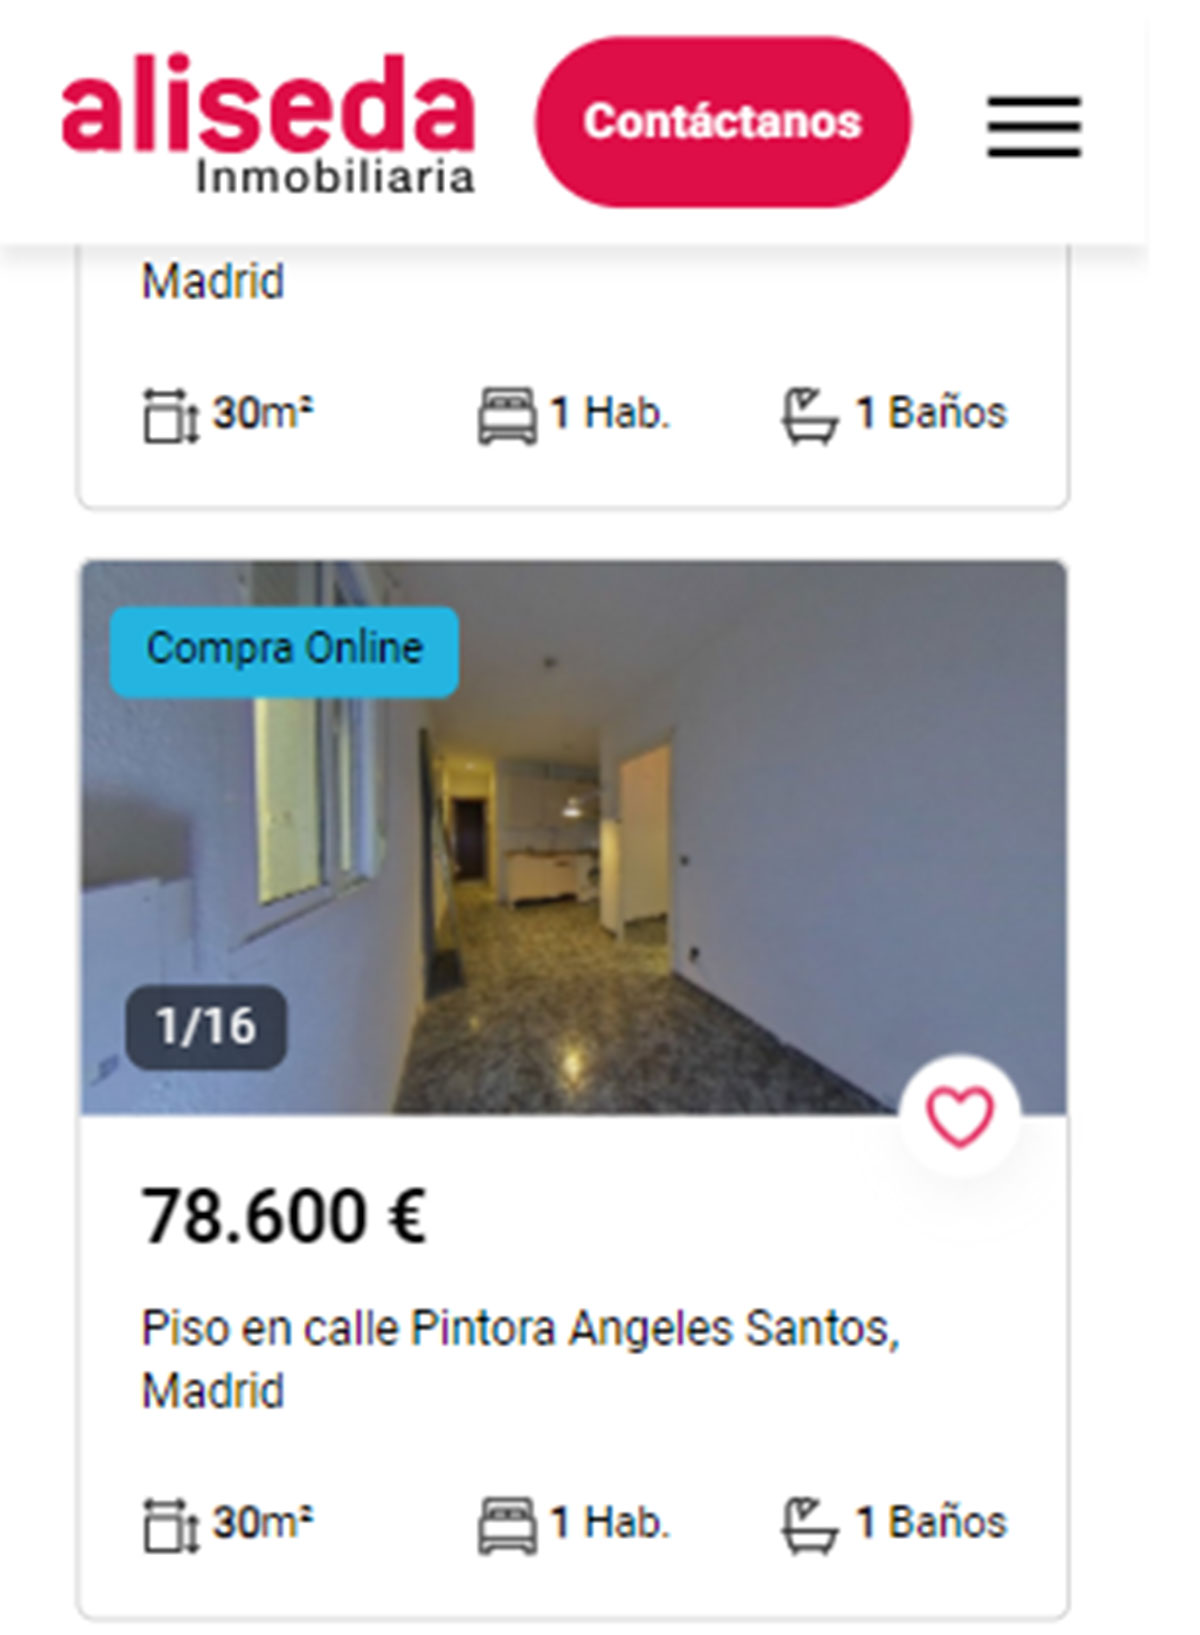 Piso en Madrid por 76.800 euros